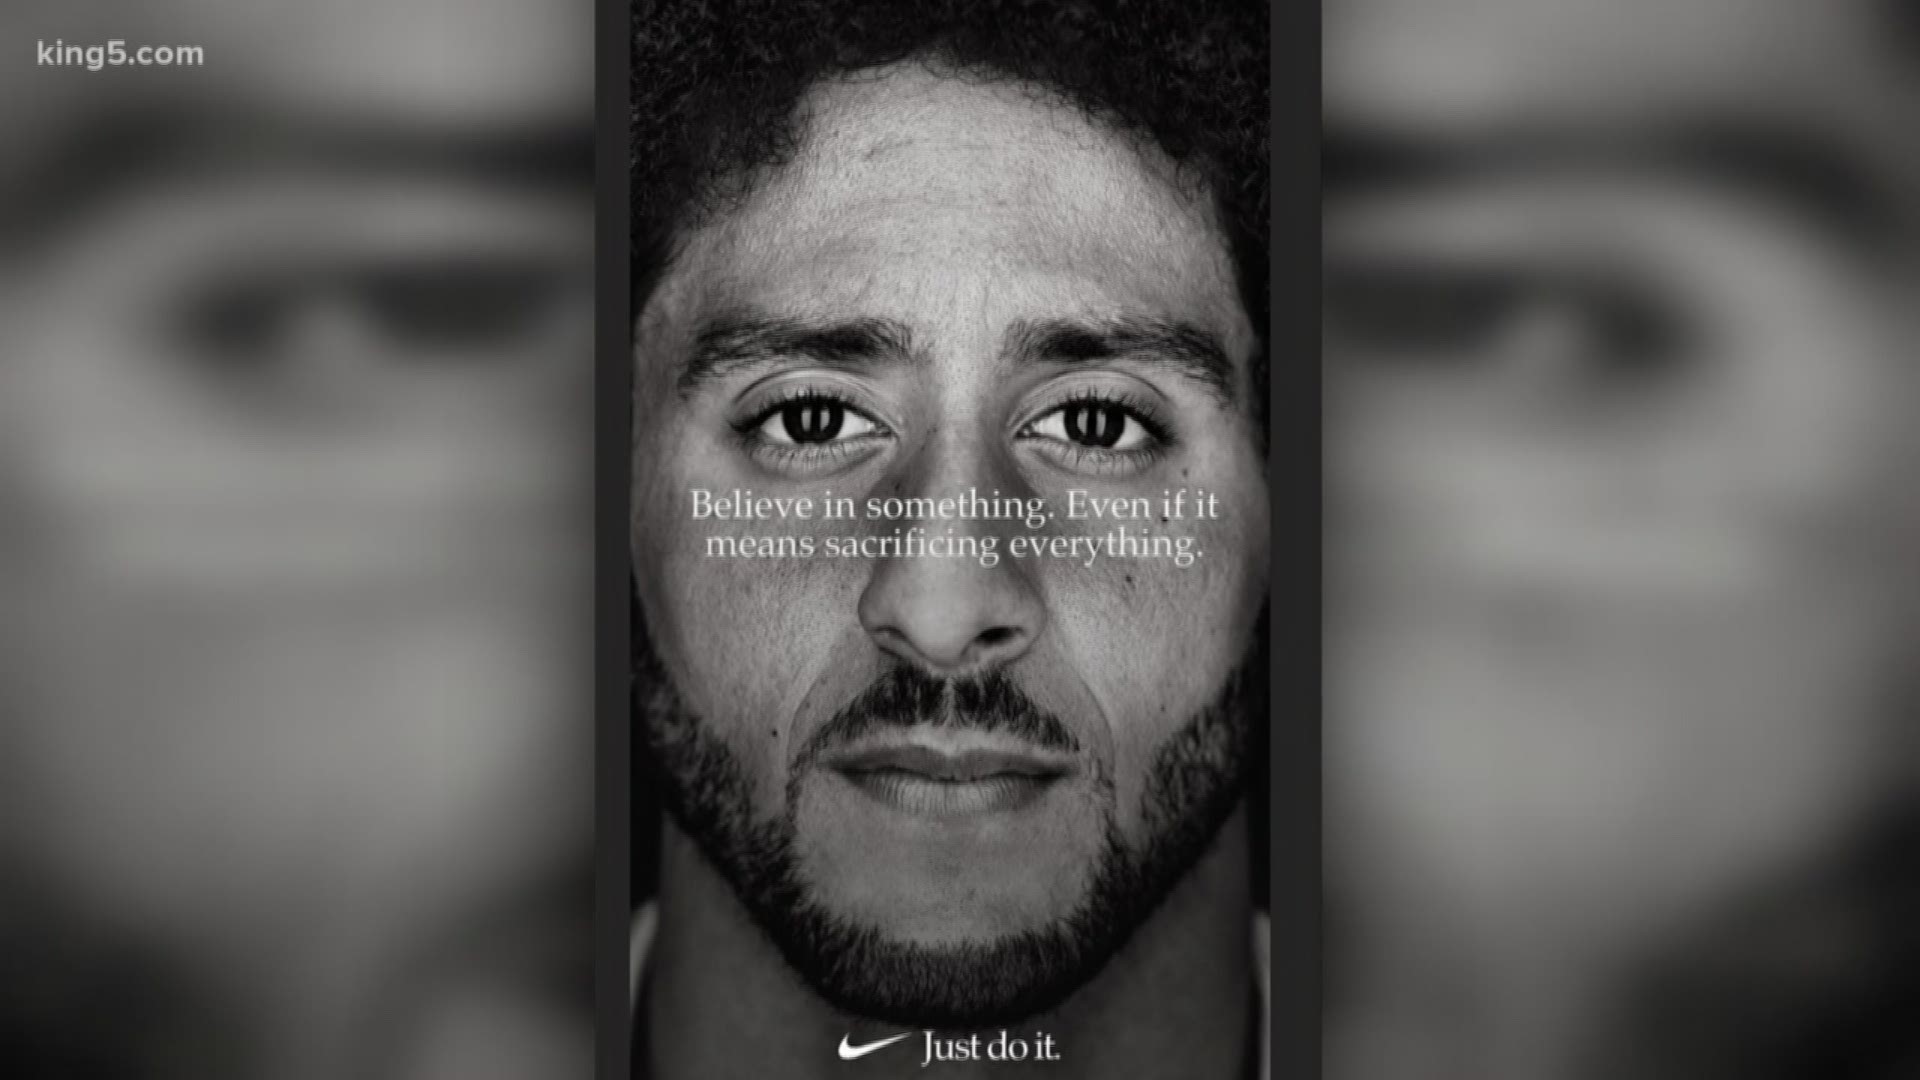 Colin Kaepernick is face of Nike campaign | king5.com